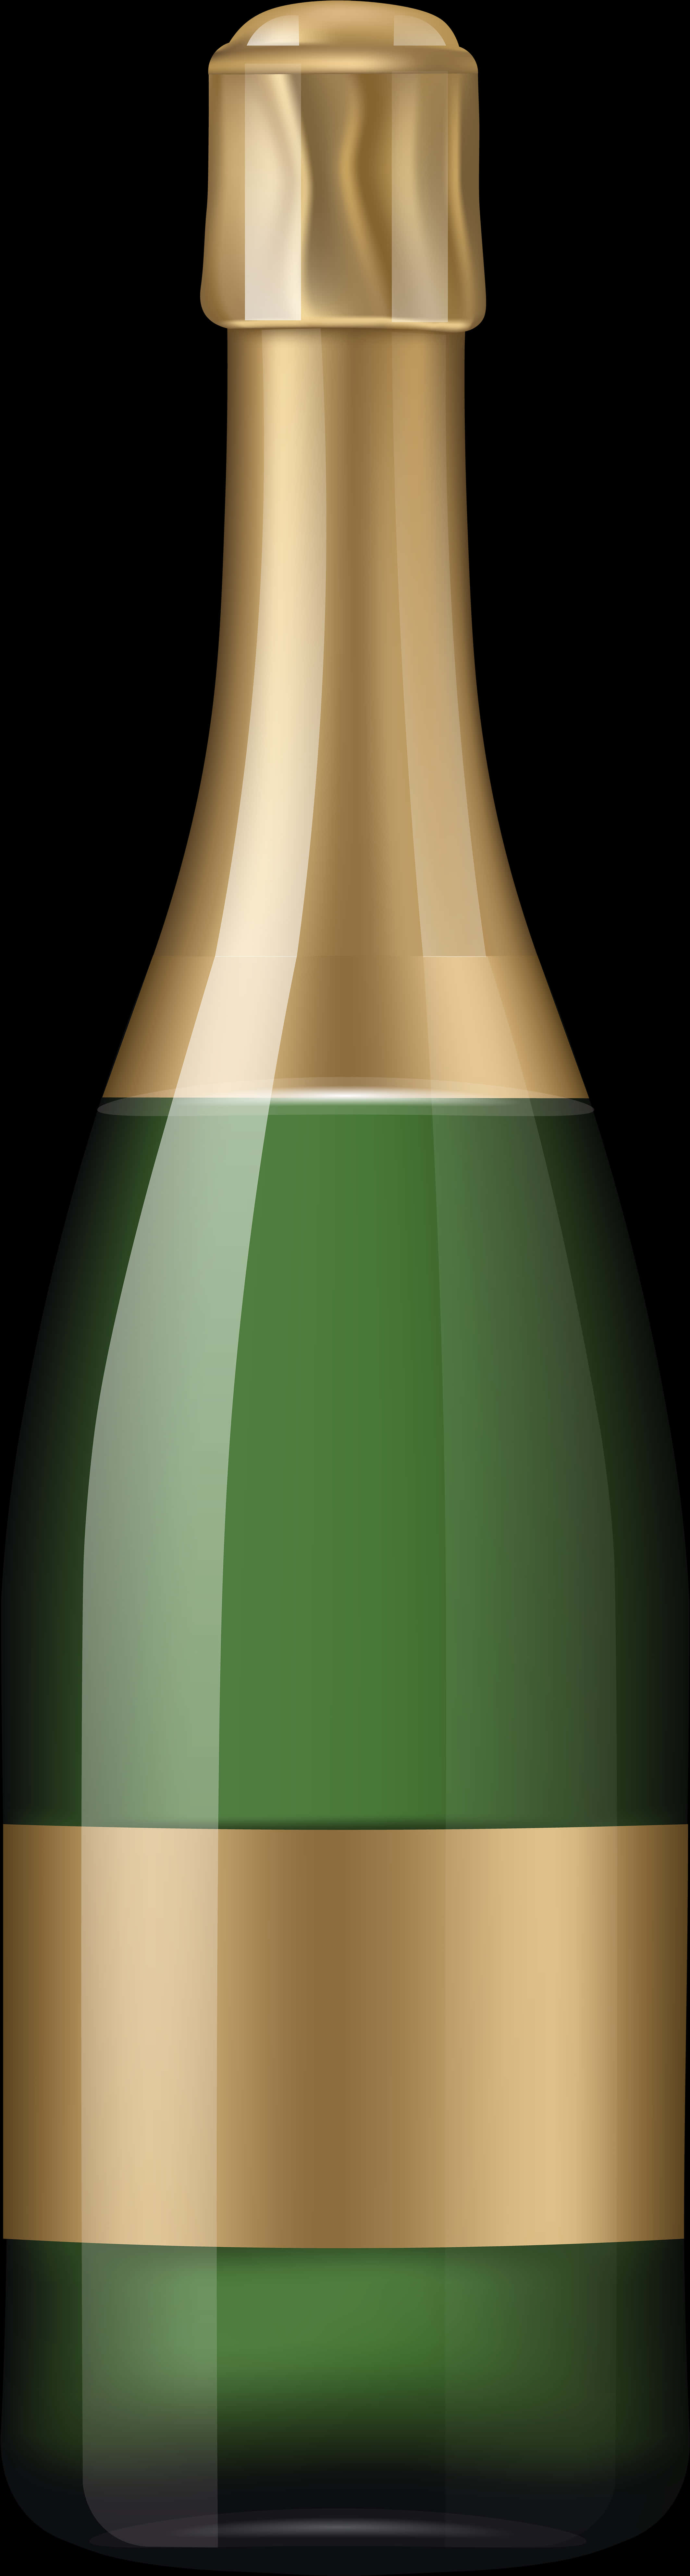 Green Champagne Bottle